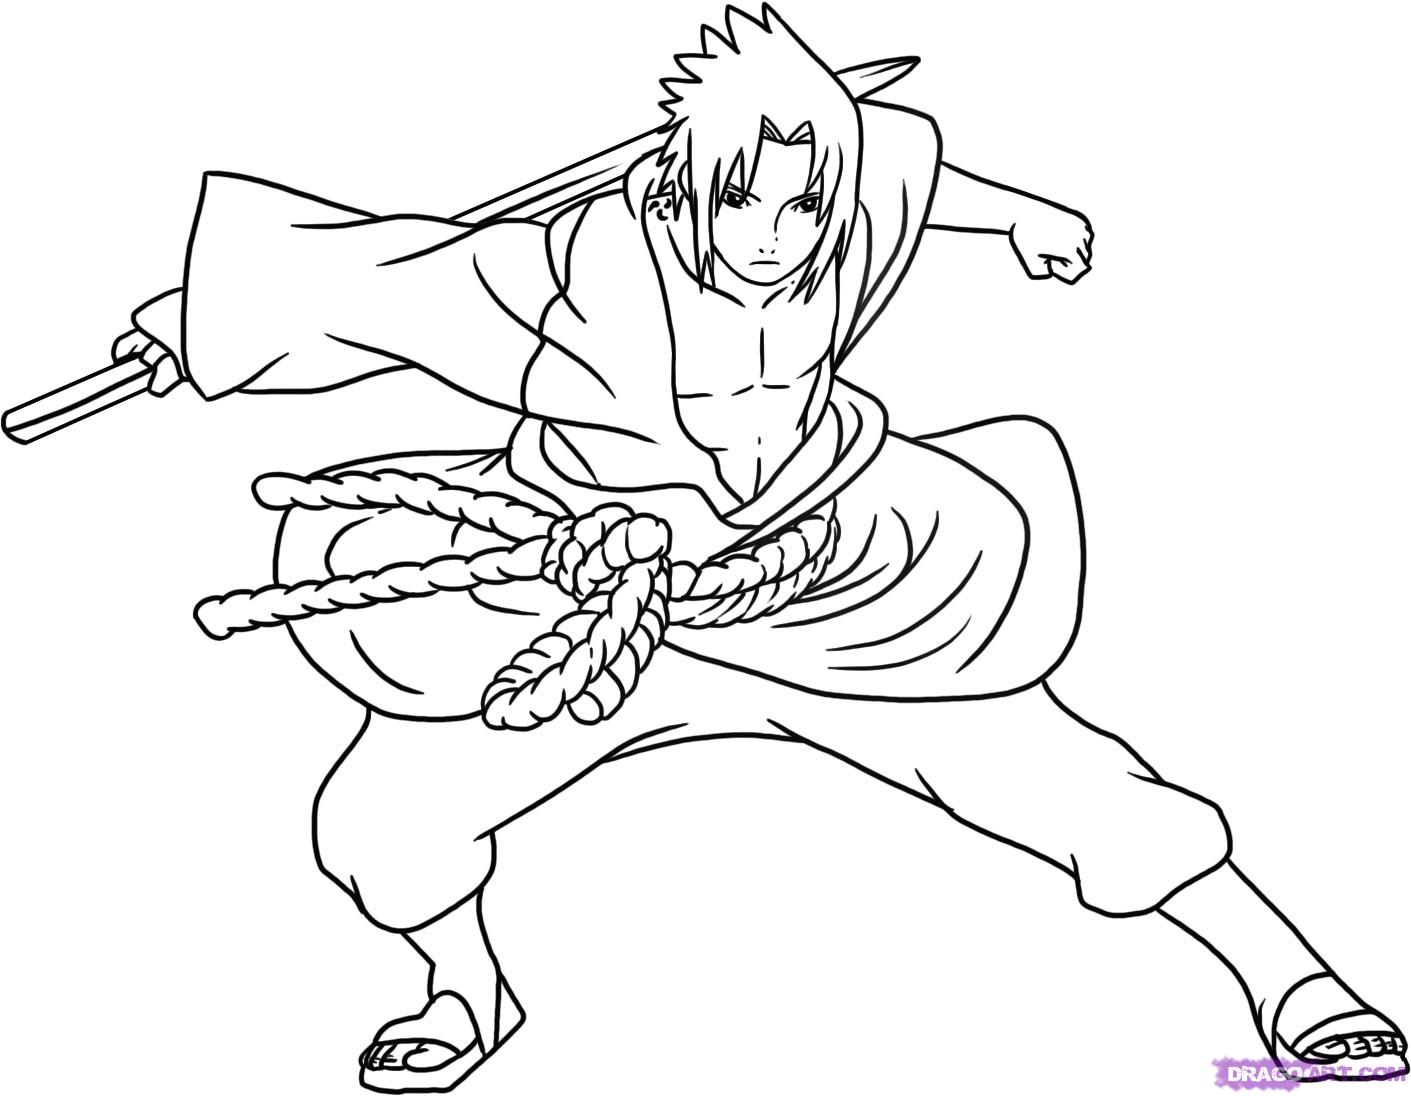 Como desenhar o NARUTO & SASUKE passo a passo, fácil e rápido #desenho  #comodesenhar #naruto #sasuke 